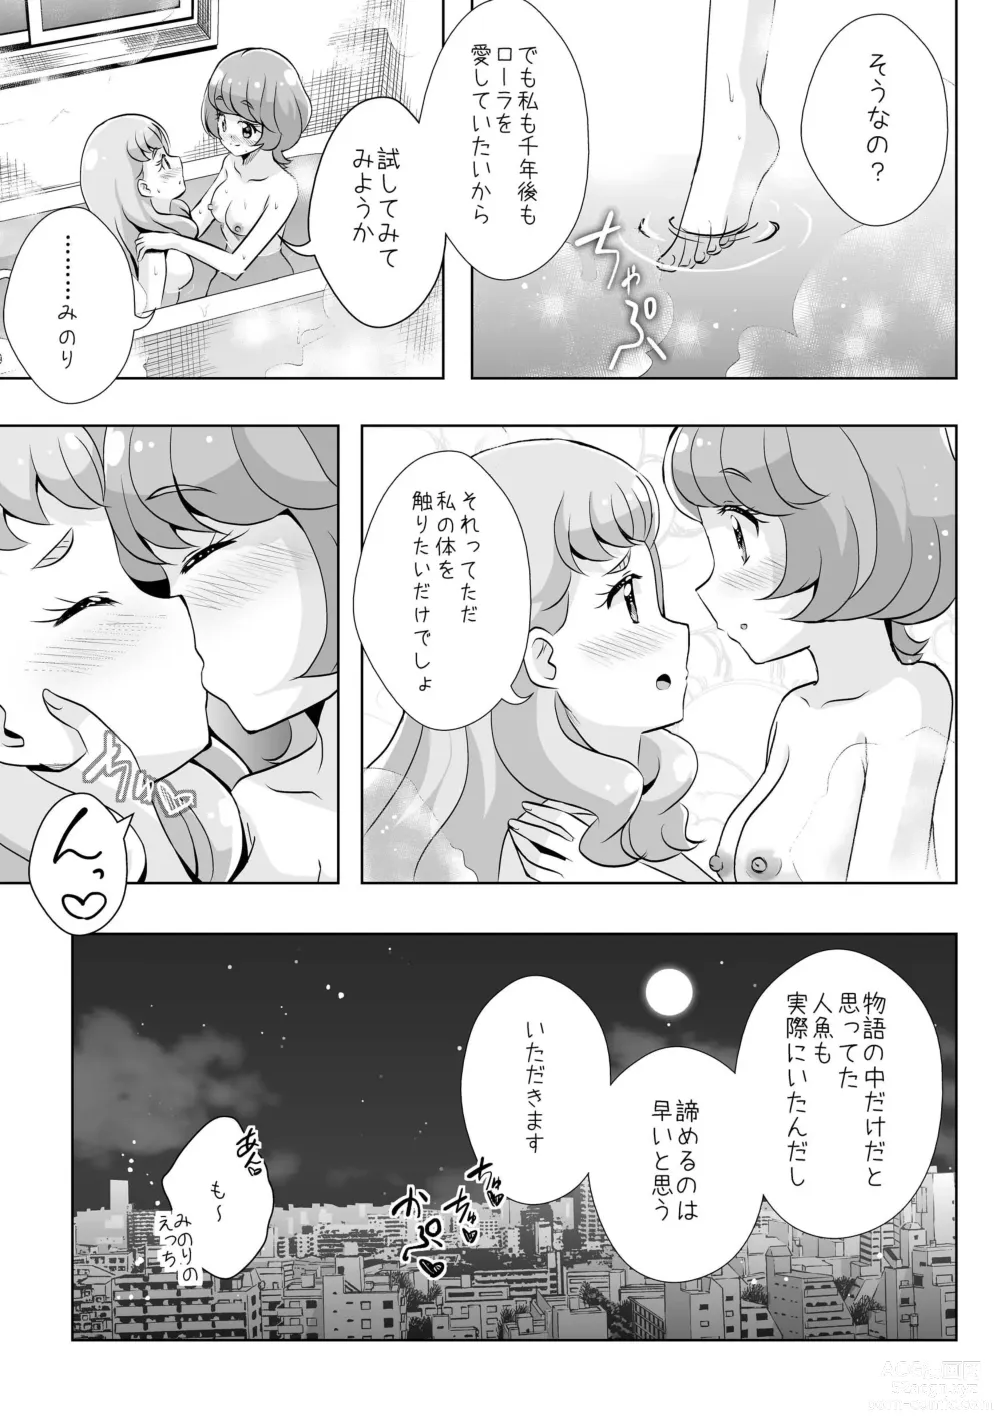 Page 36 of doujinshi Ningyo Hime Ja I Rarenai.